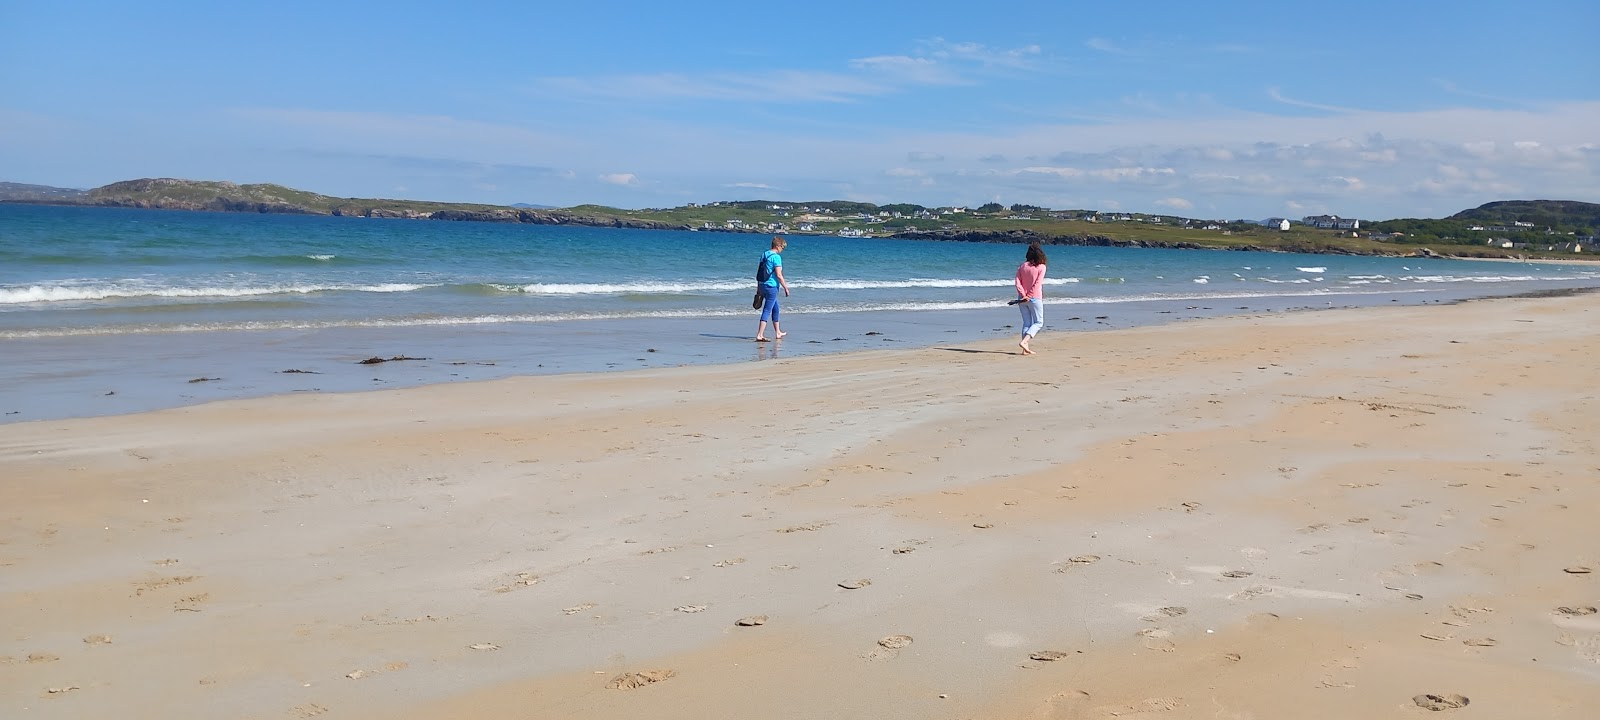 Foto de Killahoey Beach - lugar popular entre os apreciadores de relaxamento